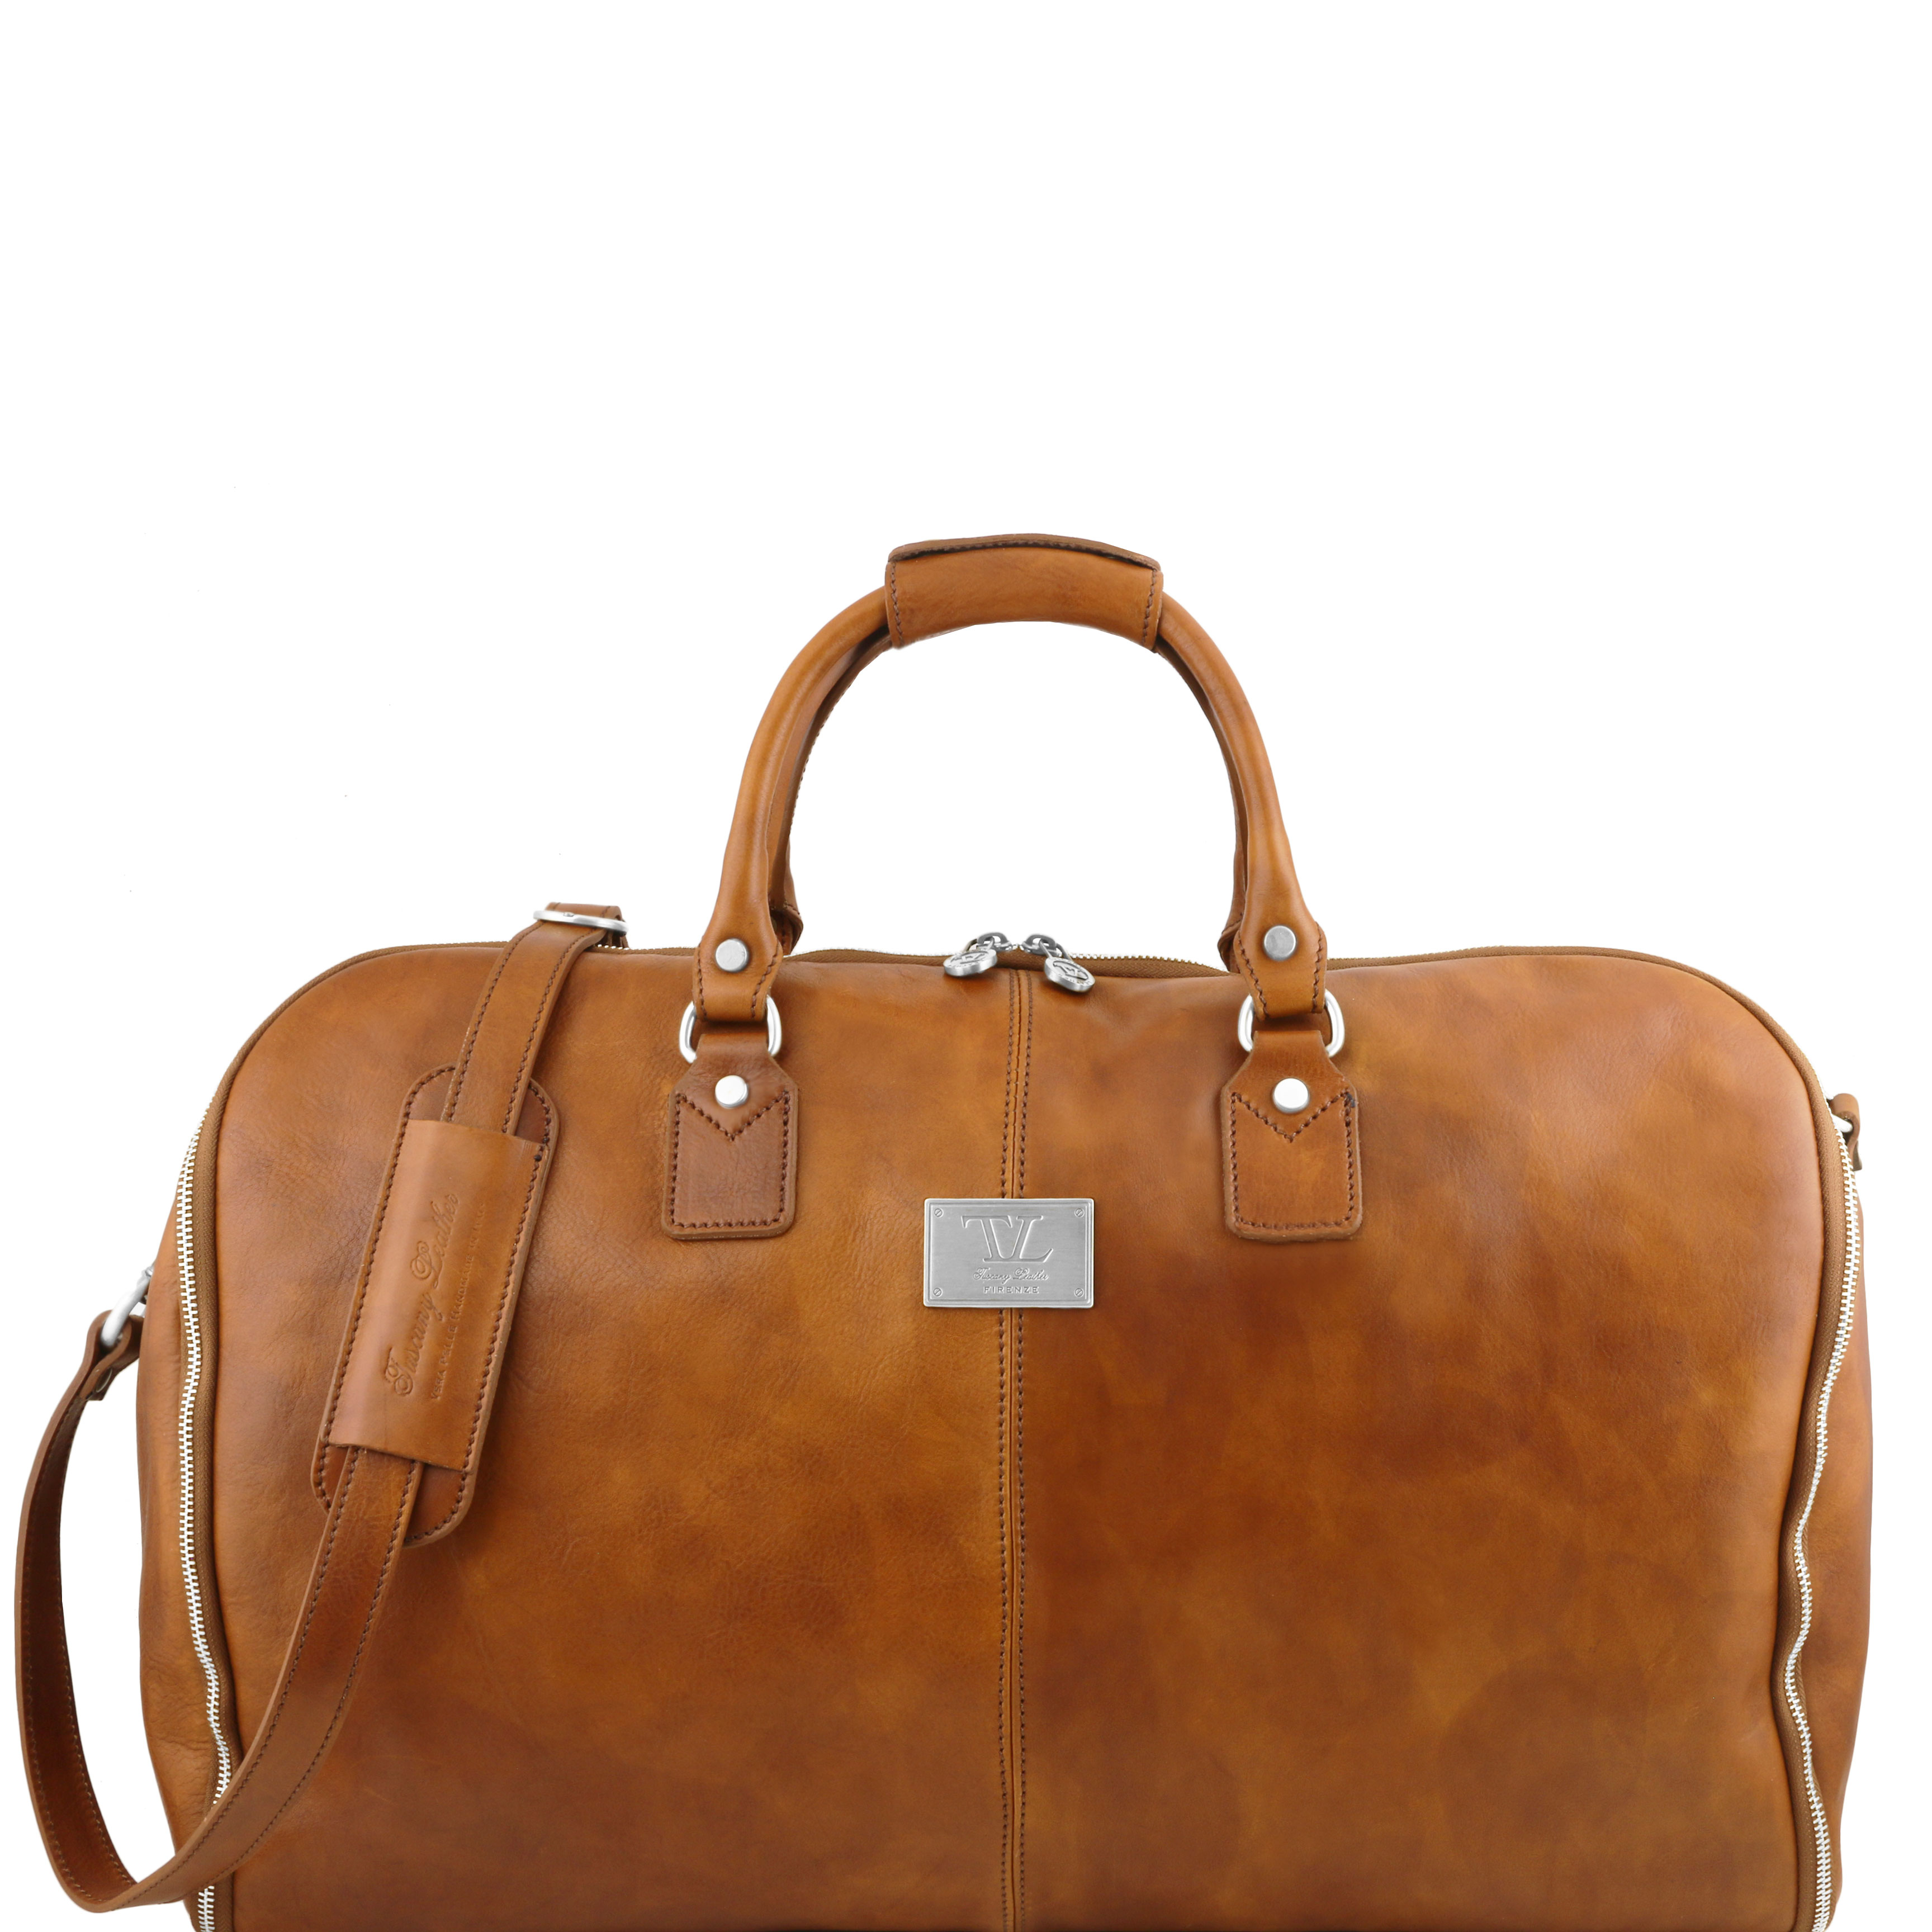 Antigua Travel leather duffle/Garment bag Natural